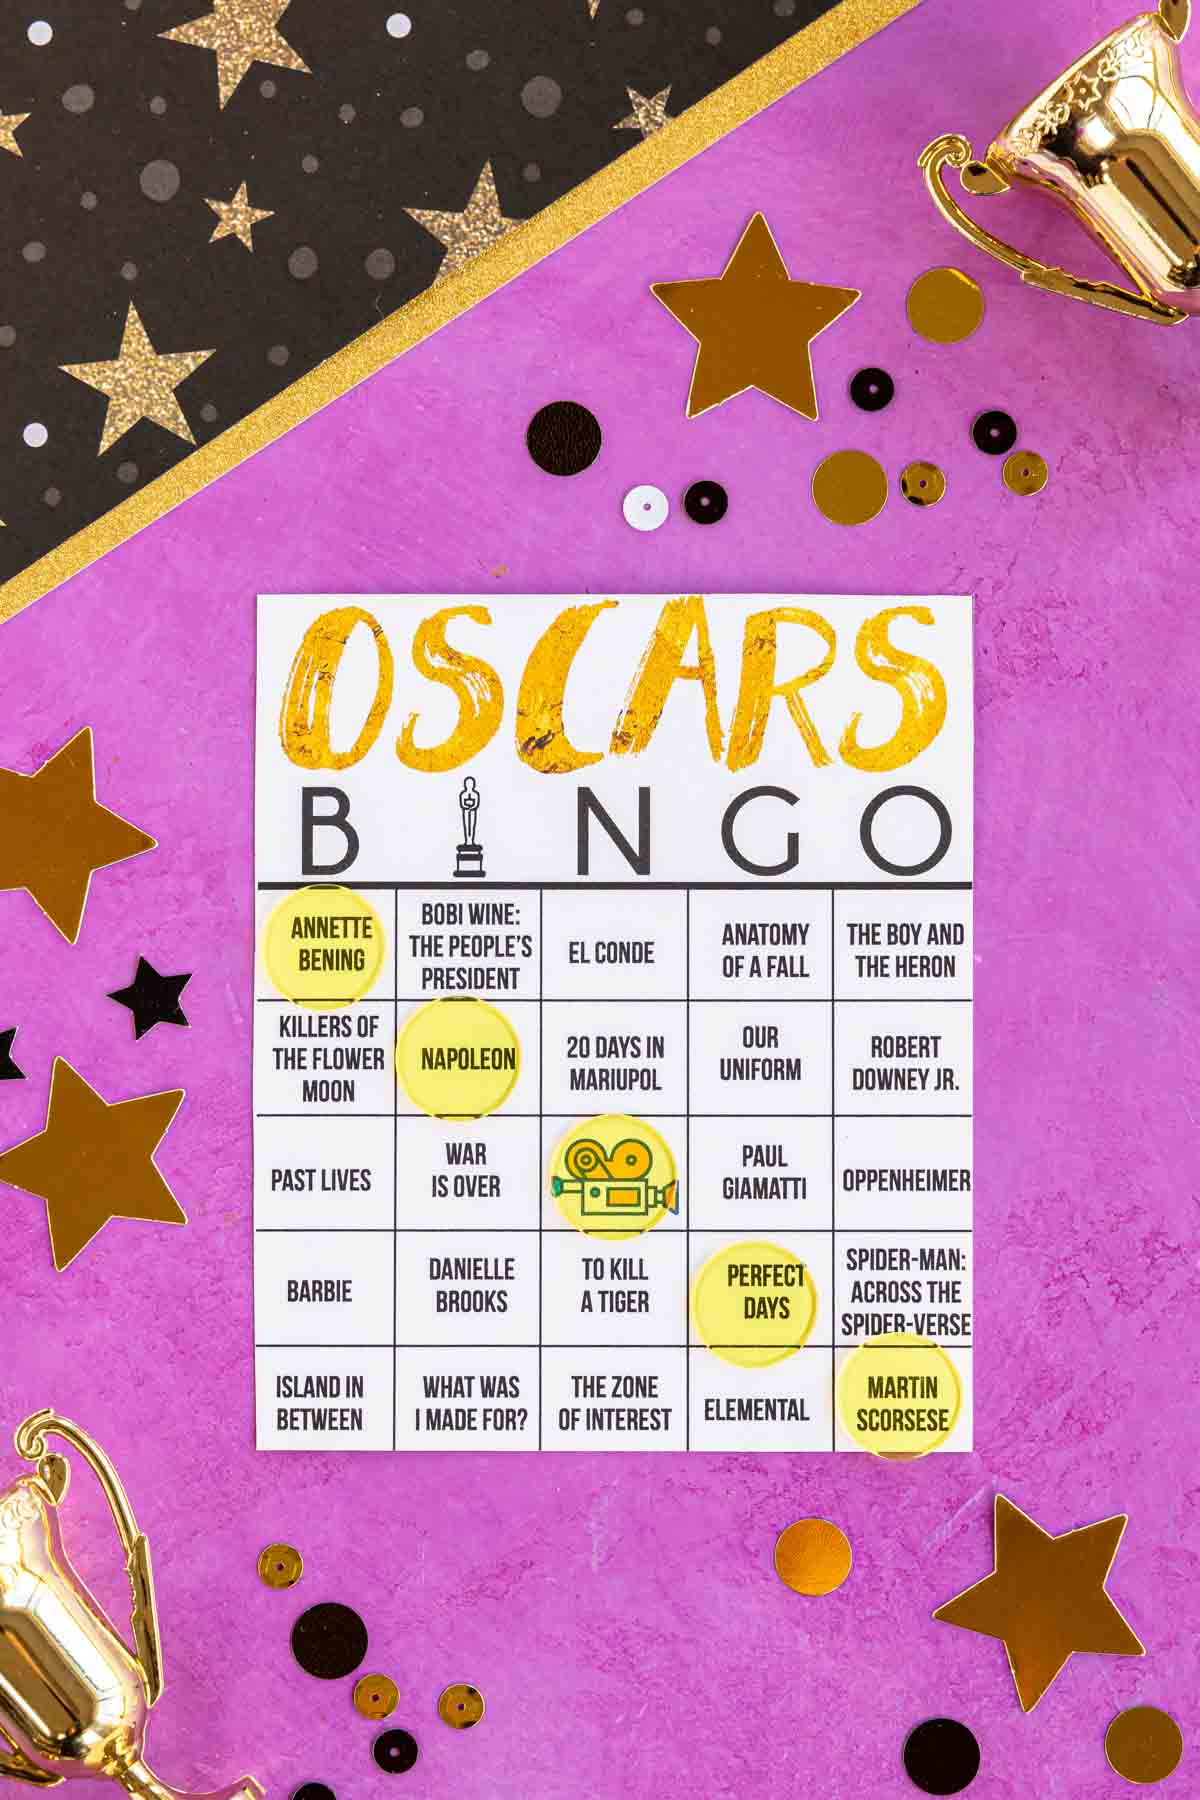 printed out Oscars bingo card 